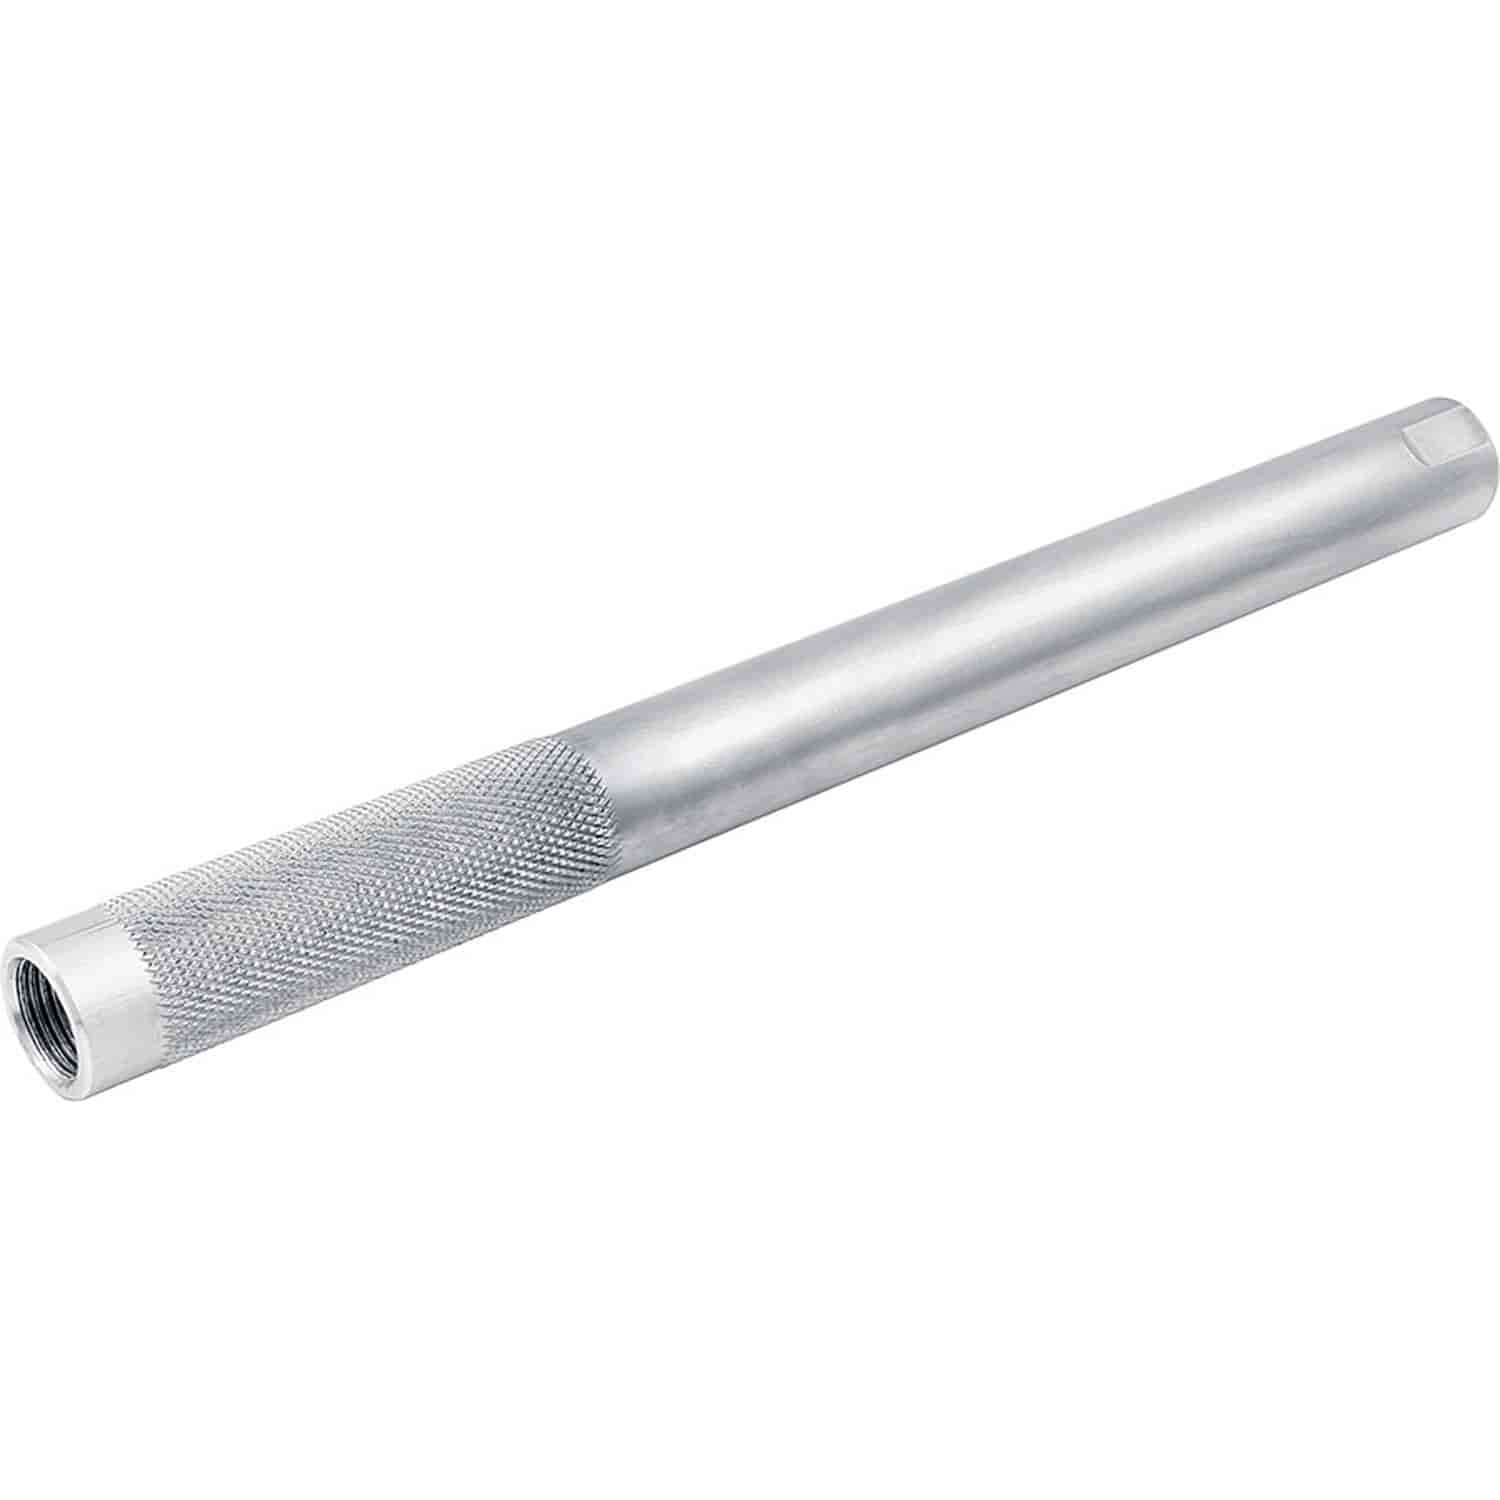 Swedged Aluminum Tie Rod Tube Length: 13